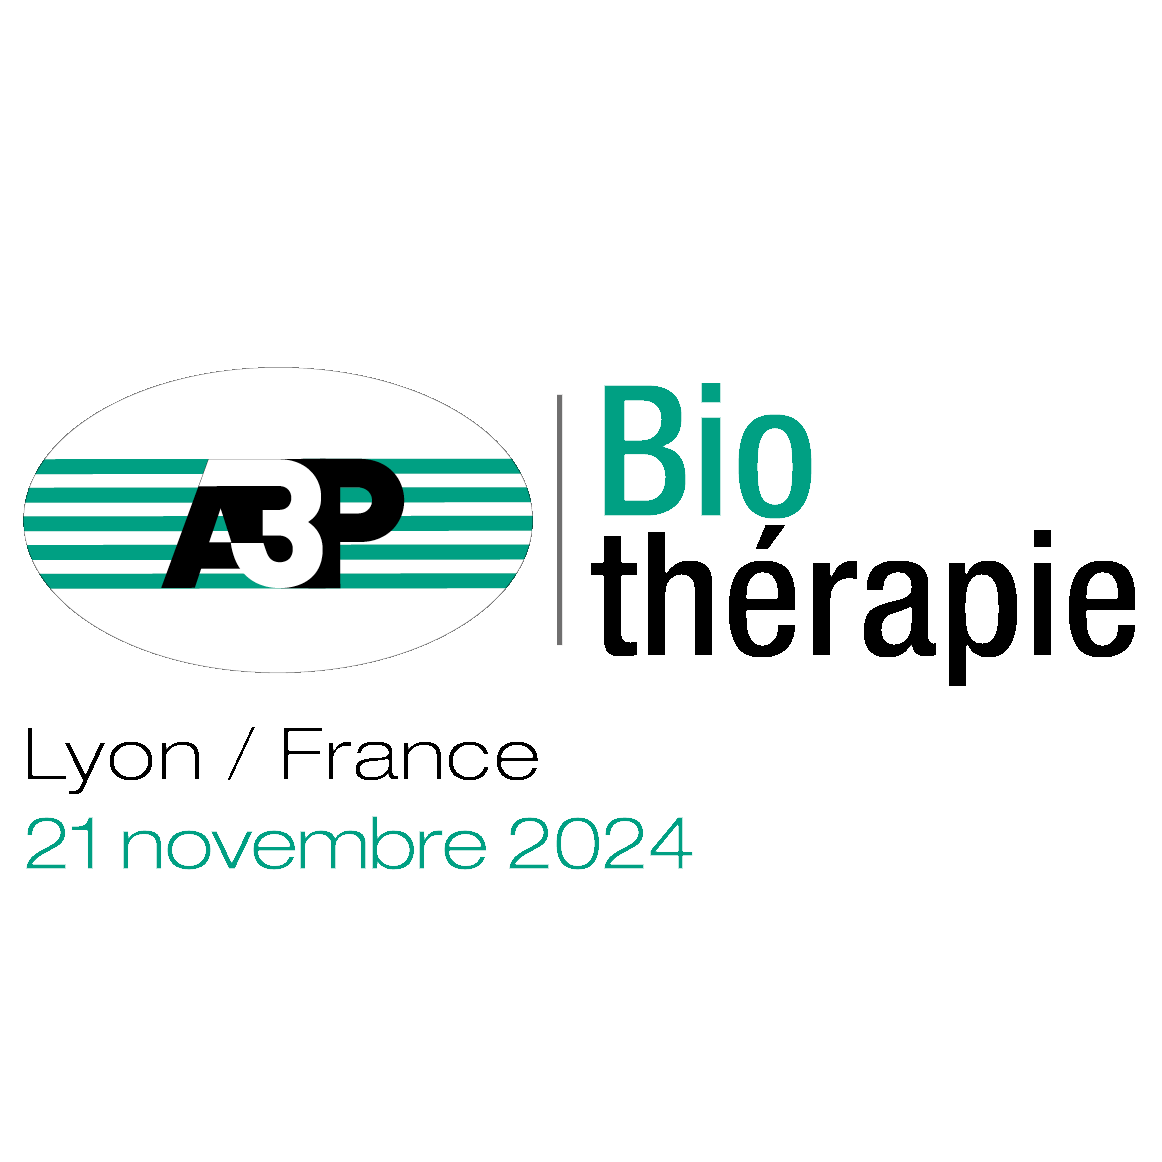 Biotherapie-a3p-2024-logo-Promepla-fond-blanc.png